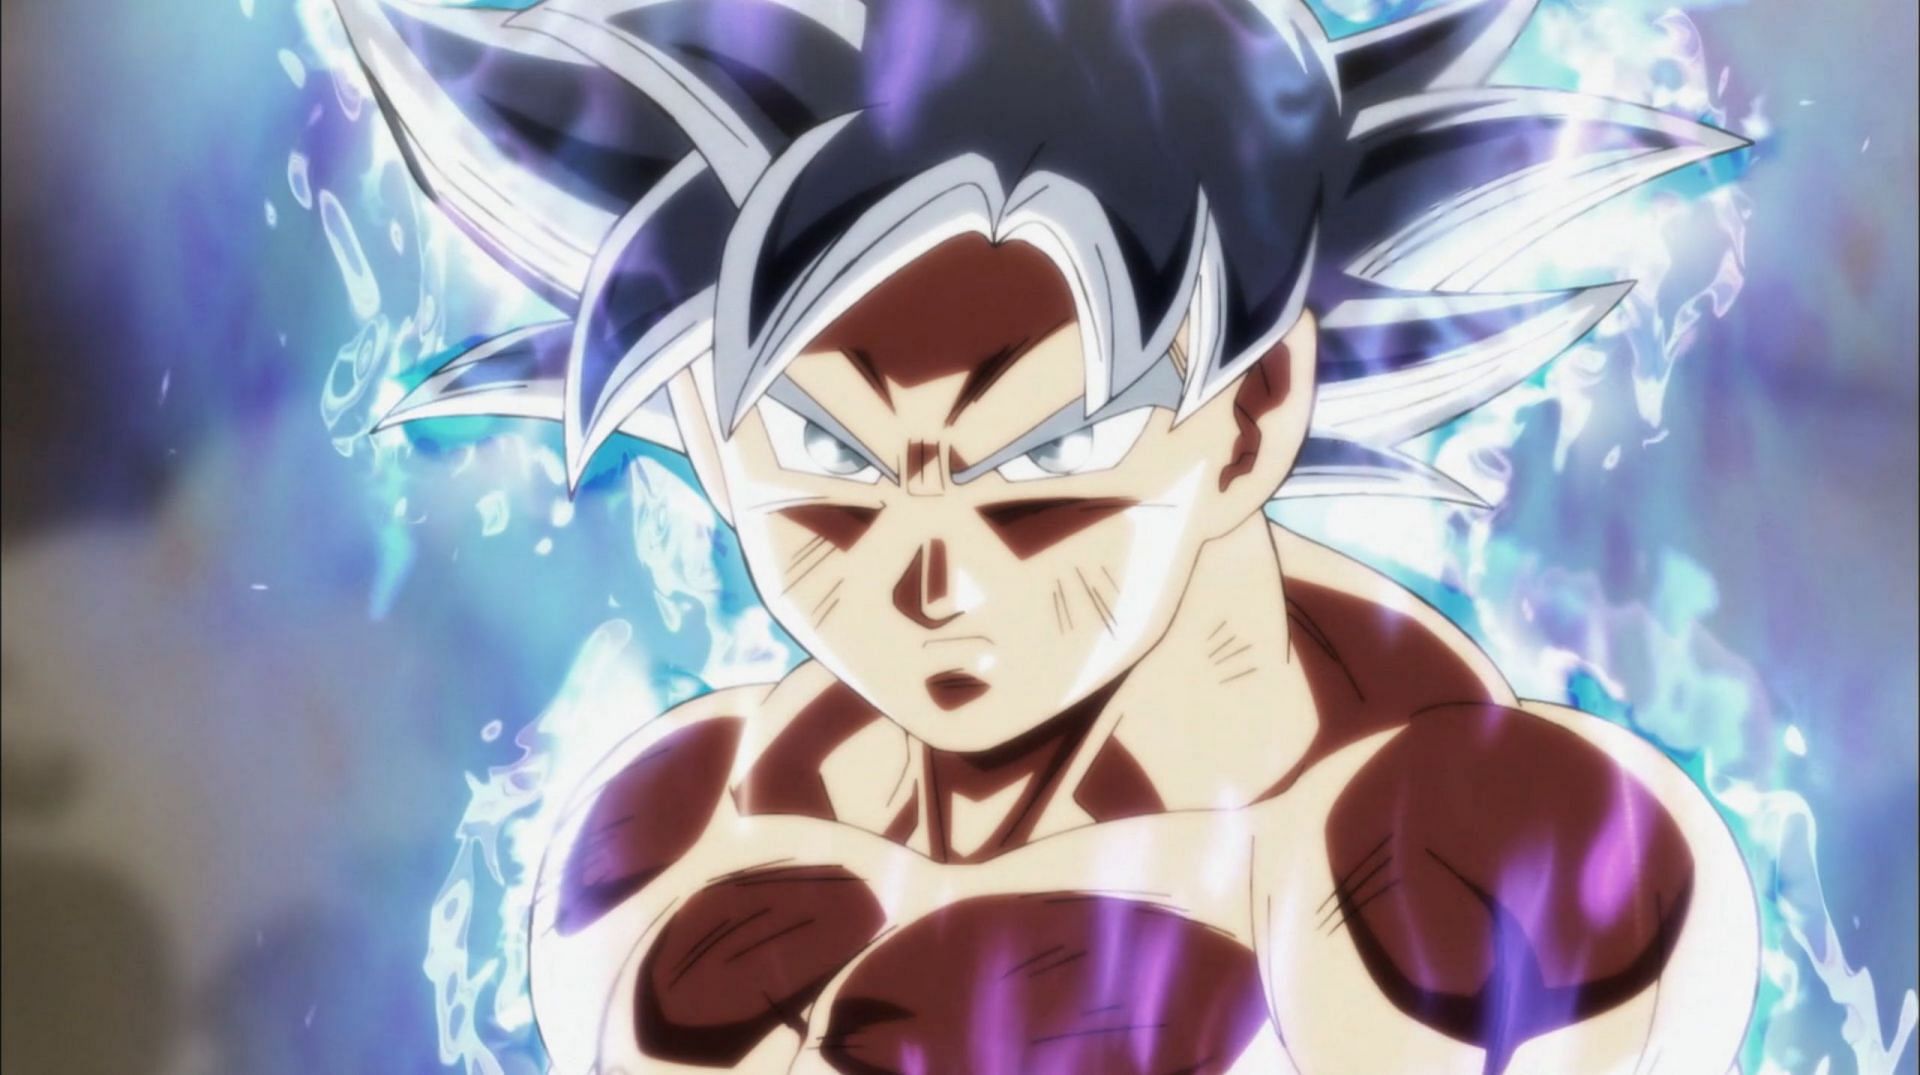 Goku in ultra instinct form (Image via Toei animations)